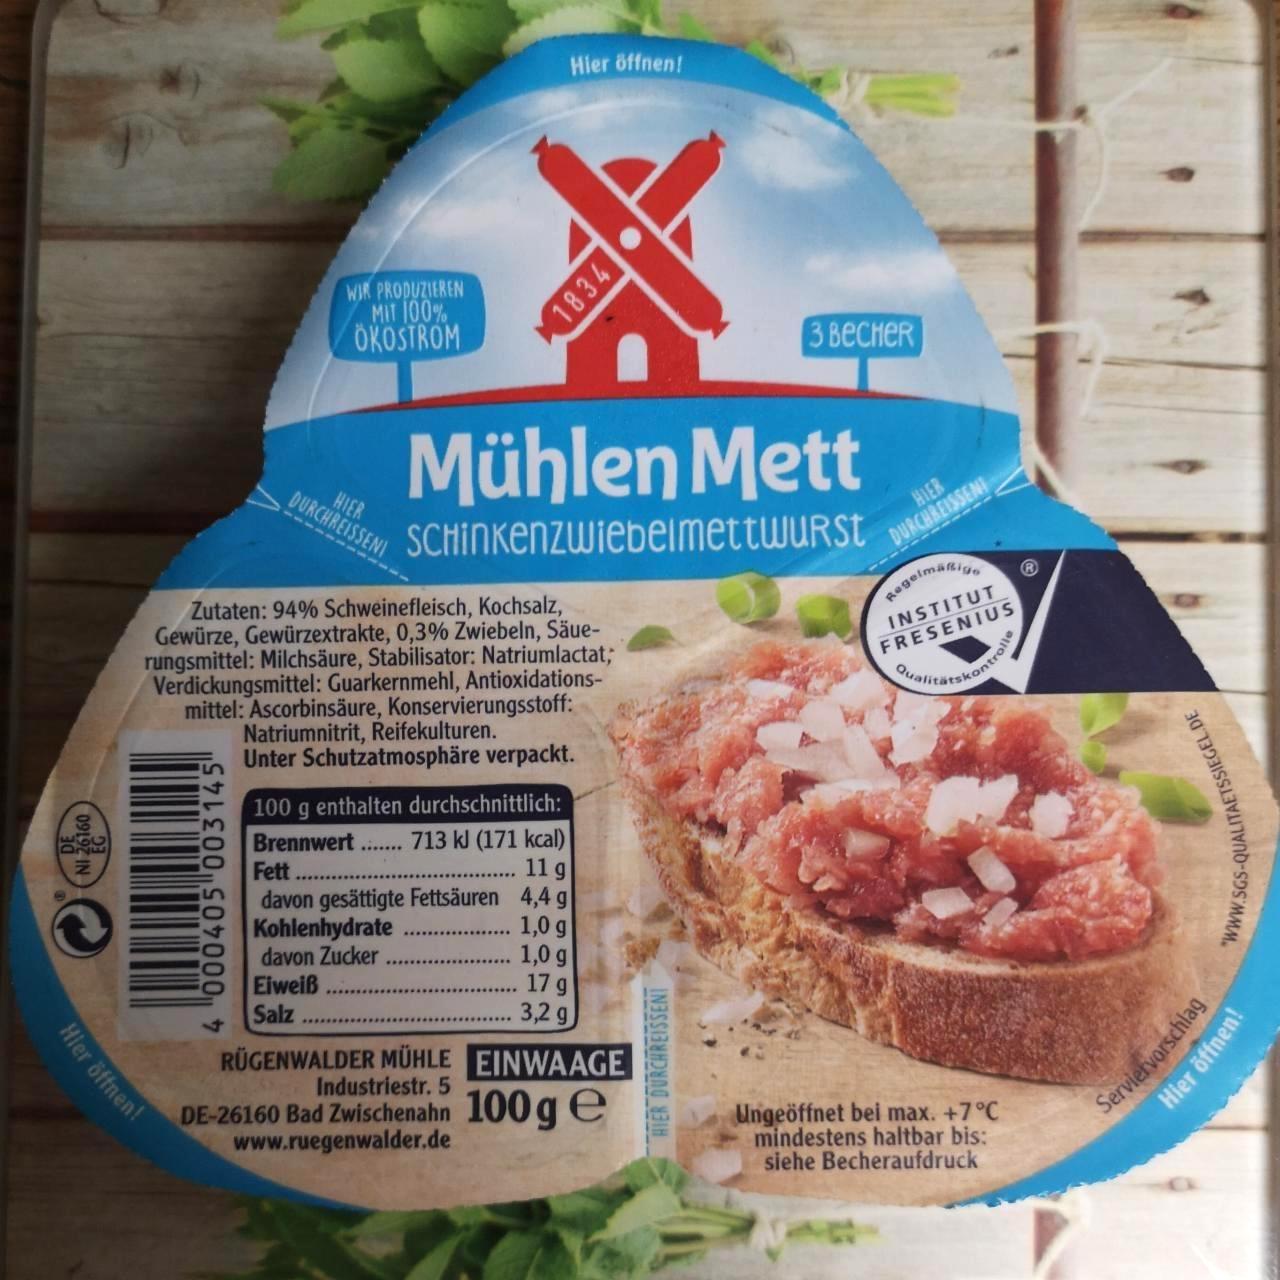 Képek - Mühlen Mett